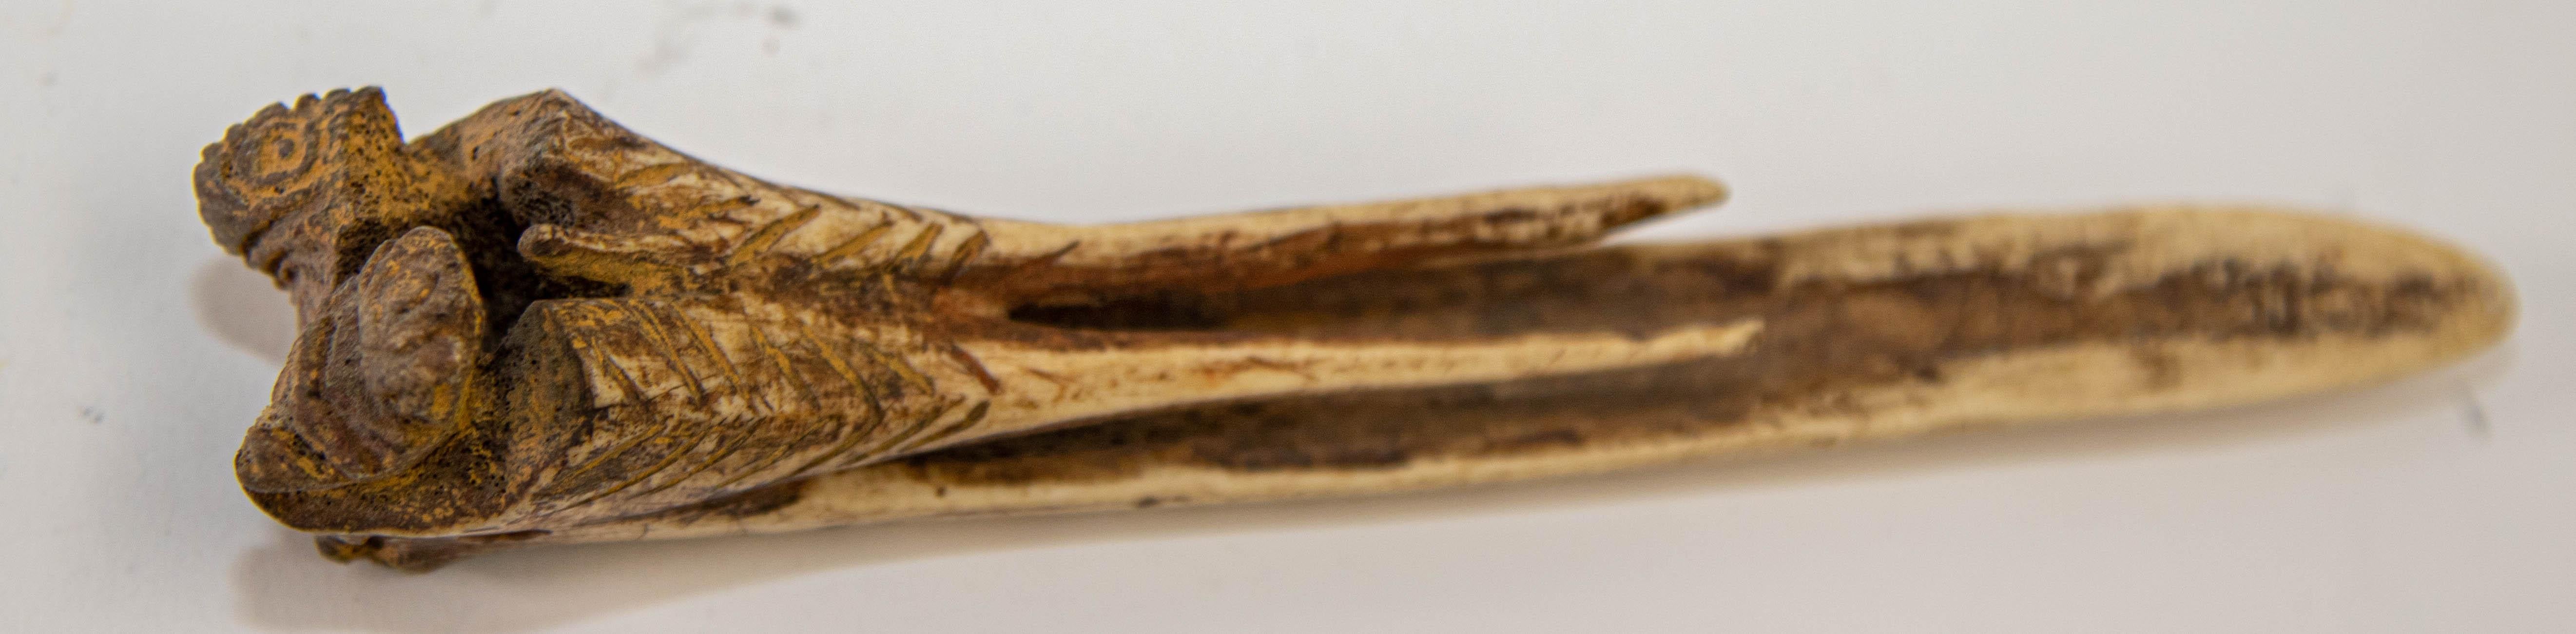 Antique Ethnic Artifact Sepik River Cassowary Bone from Papua New Guinea For Sale 11